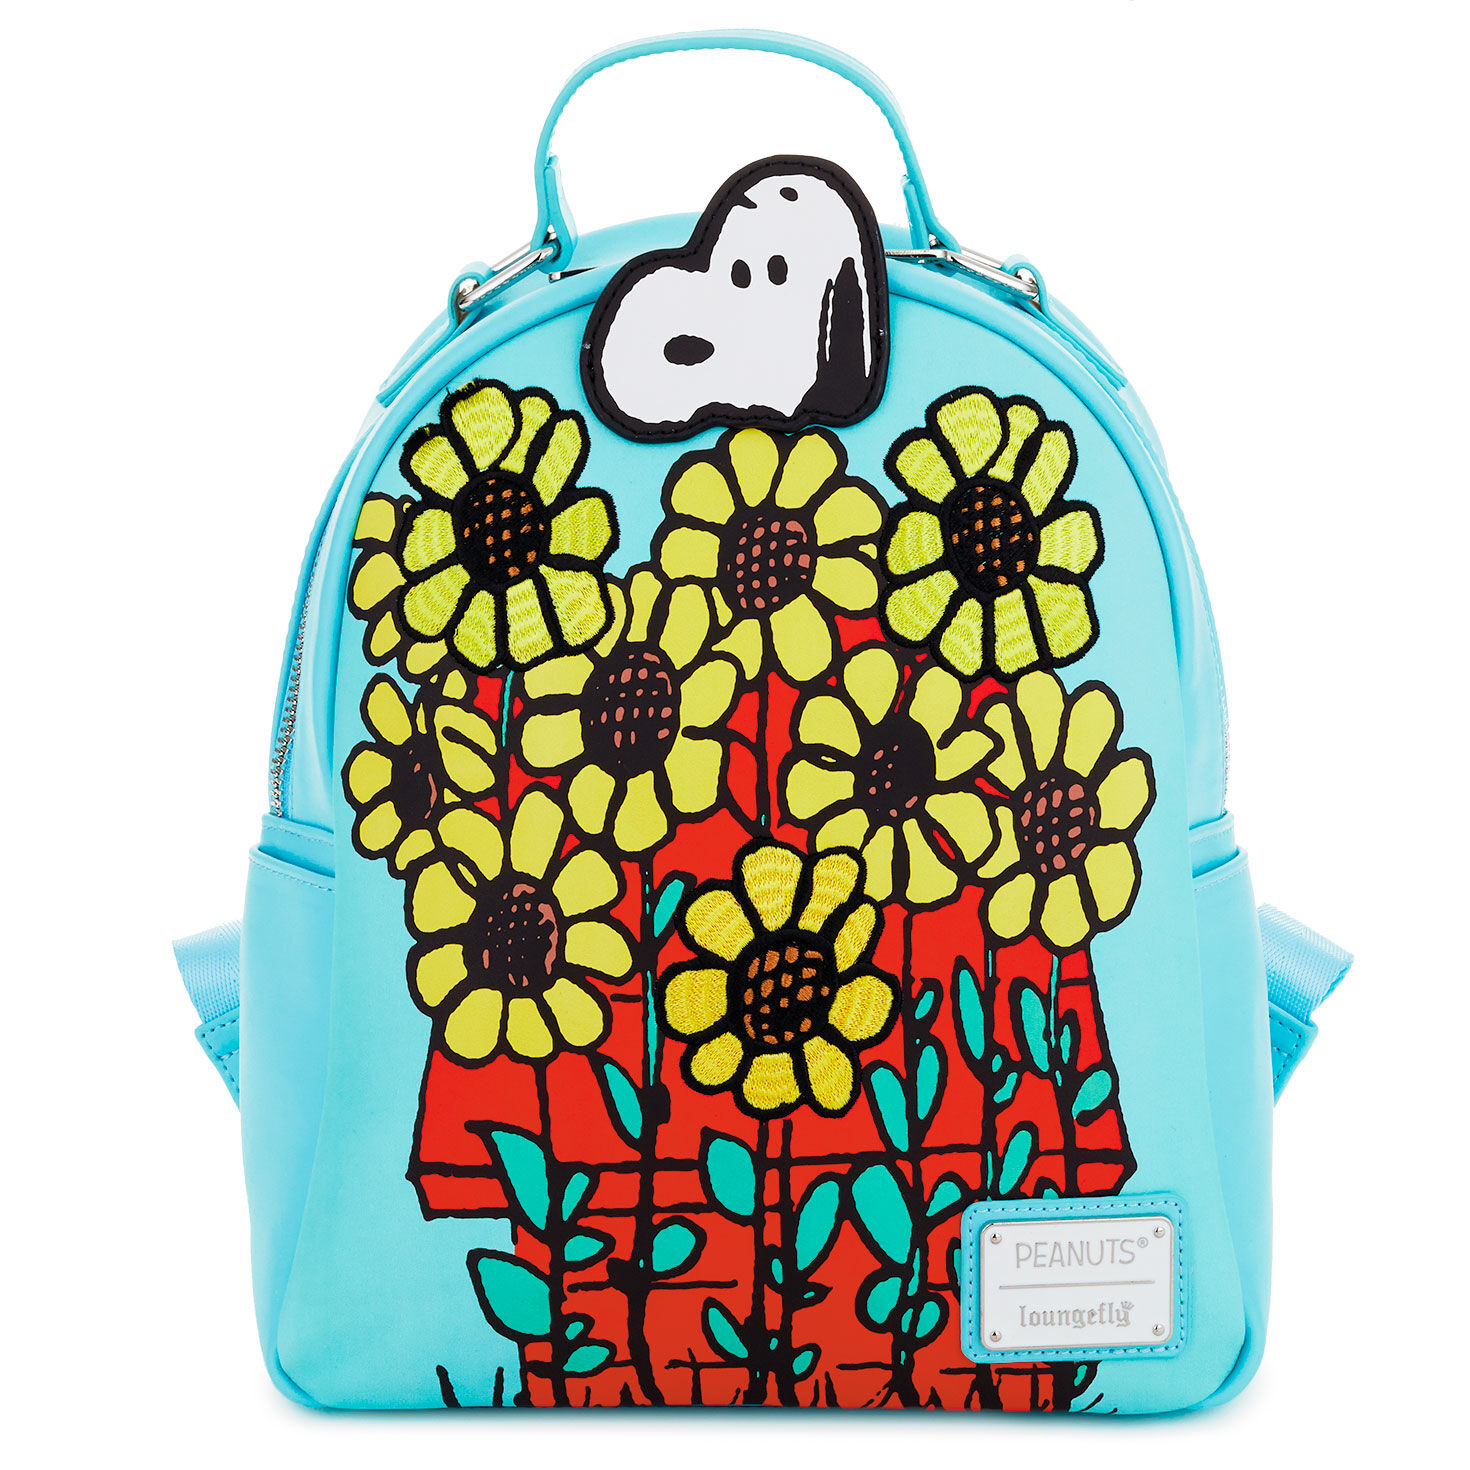 Snoopy Gift Idea Snoopy School Bag Peanuts Bag/Backpacks Snoopy Backpack 